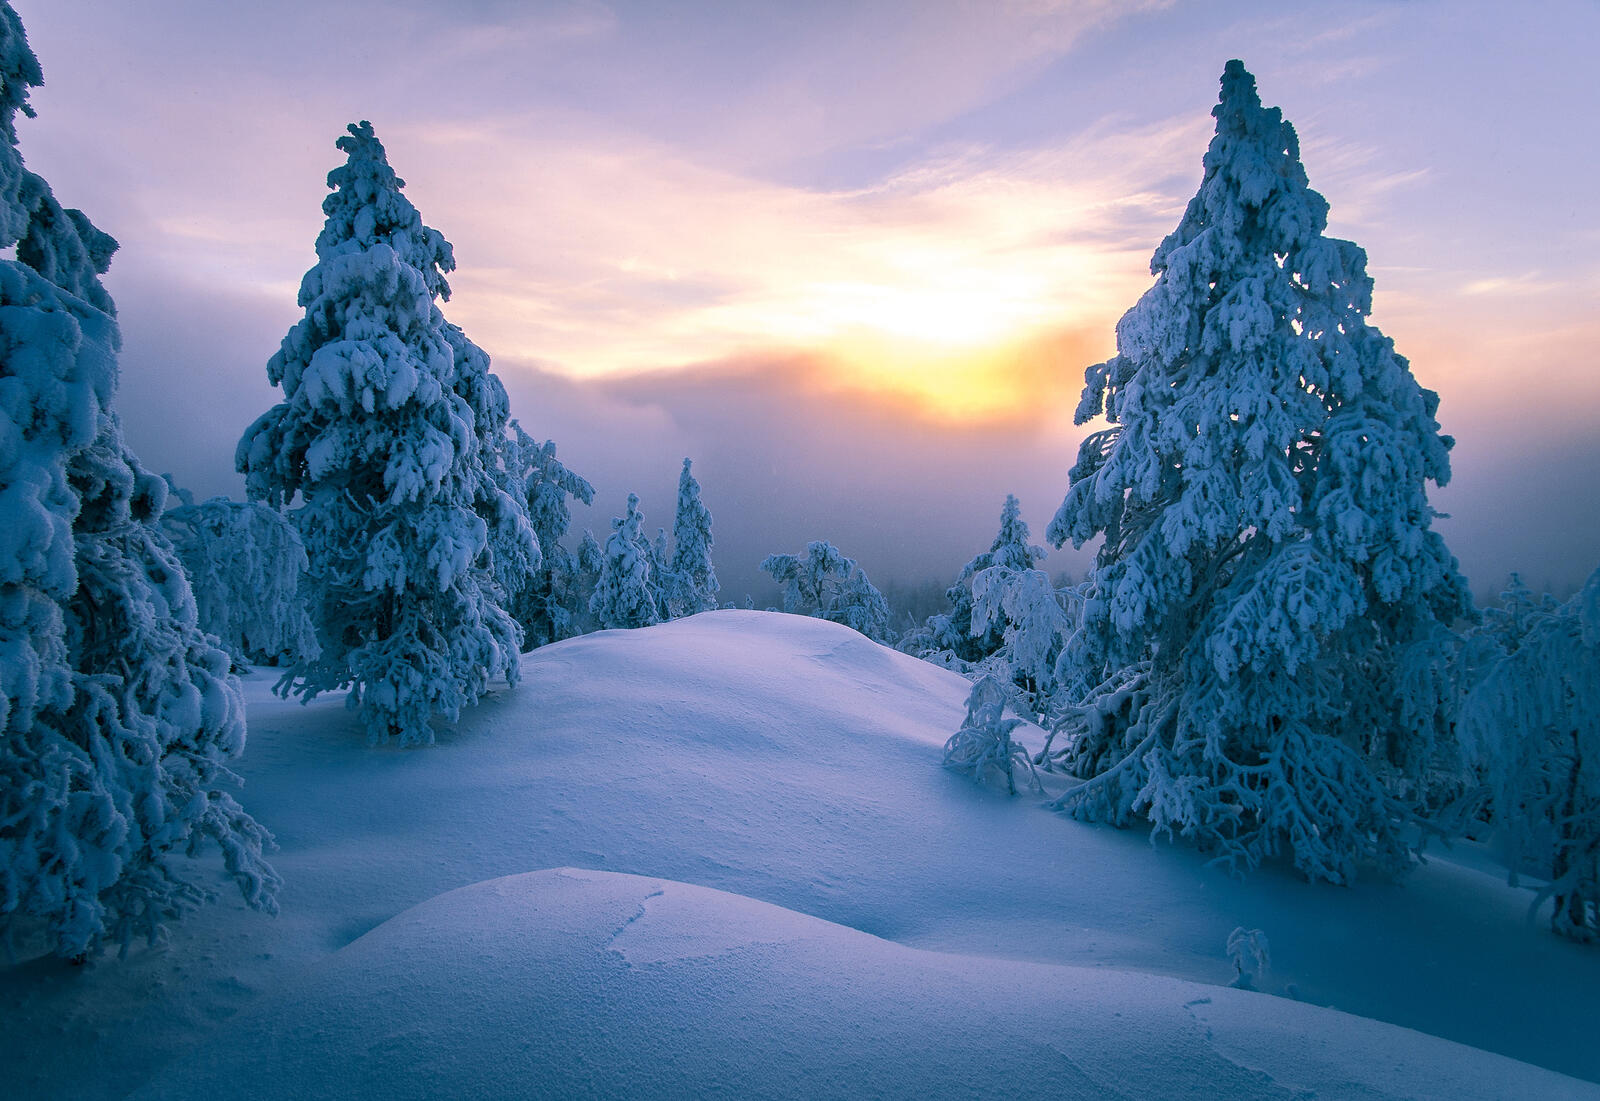 Обои Лапландия снег холмы на рабочий стол